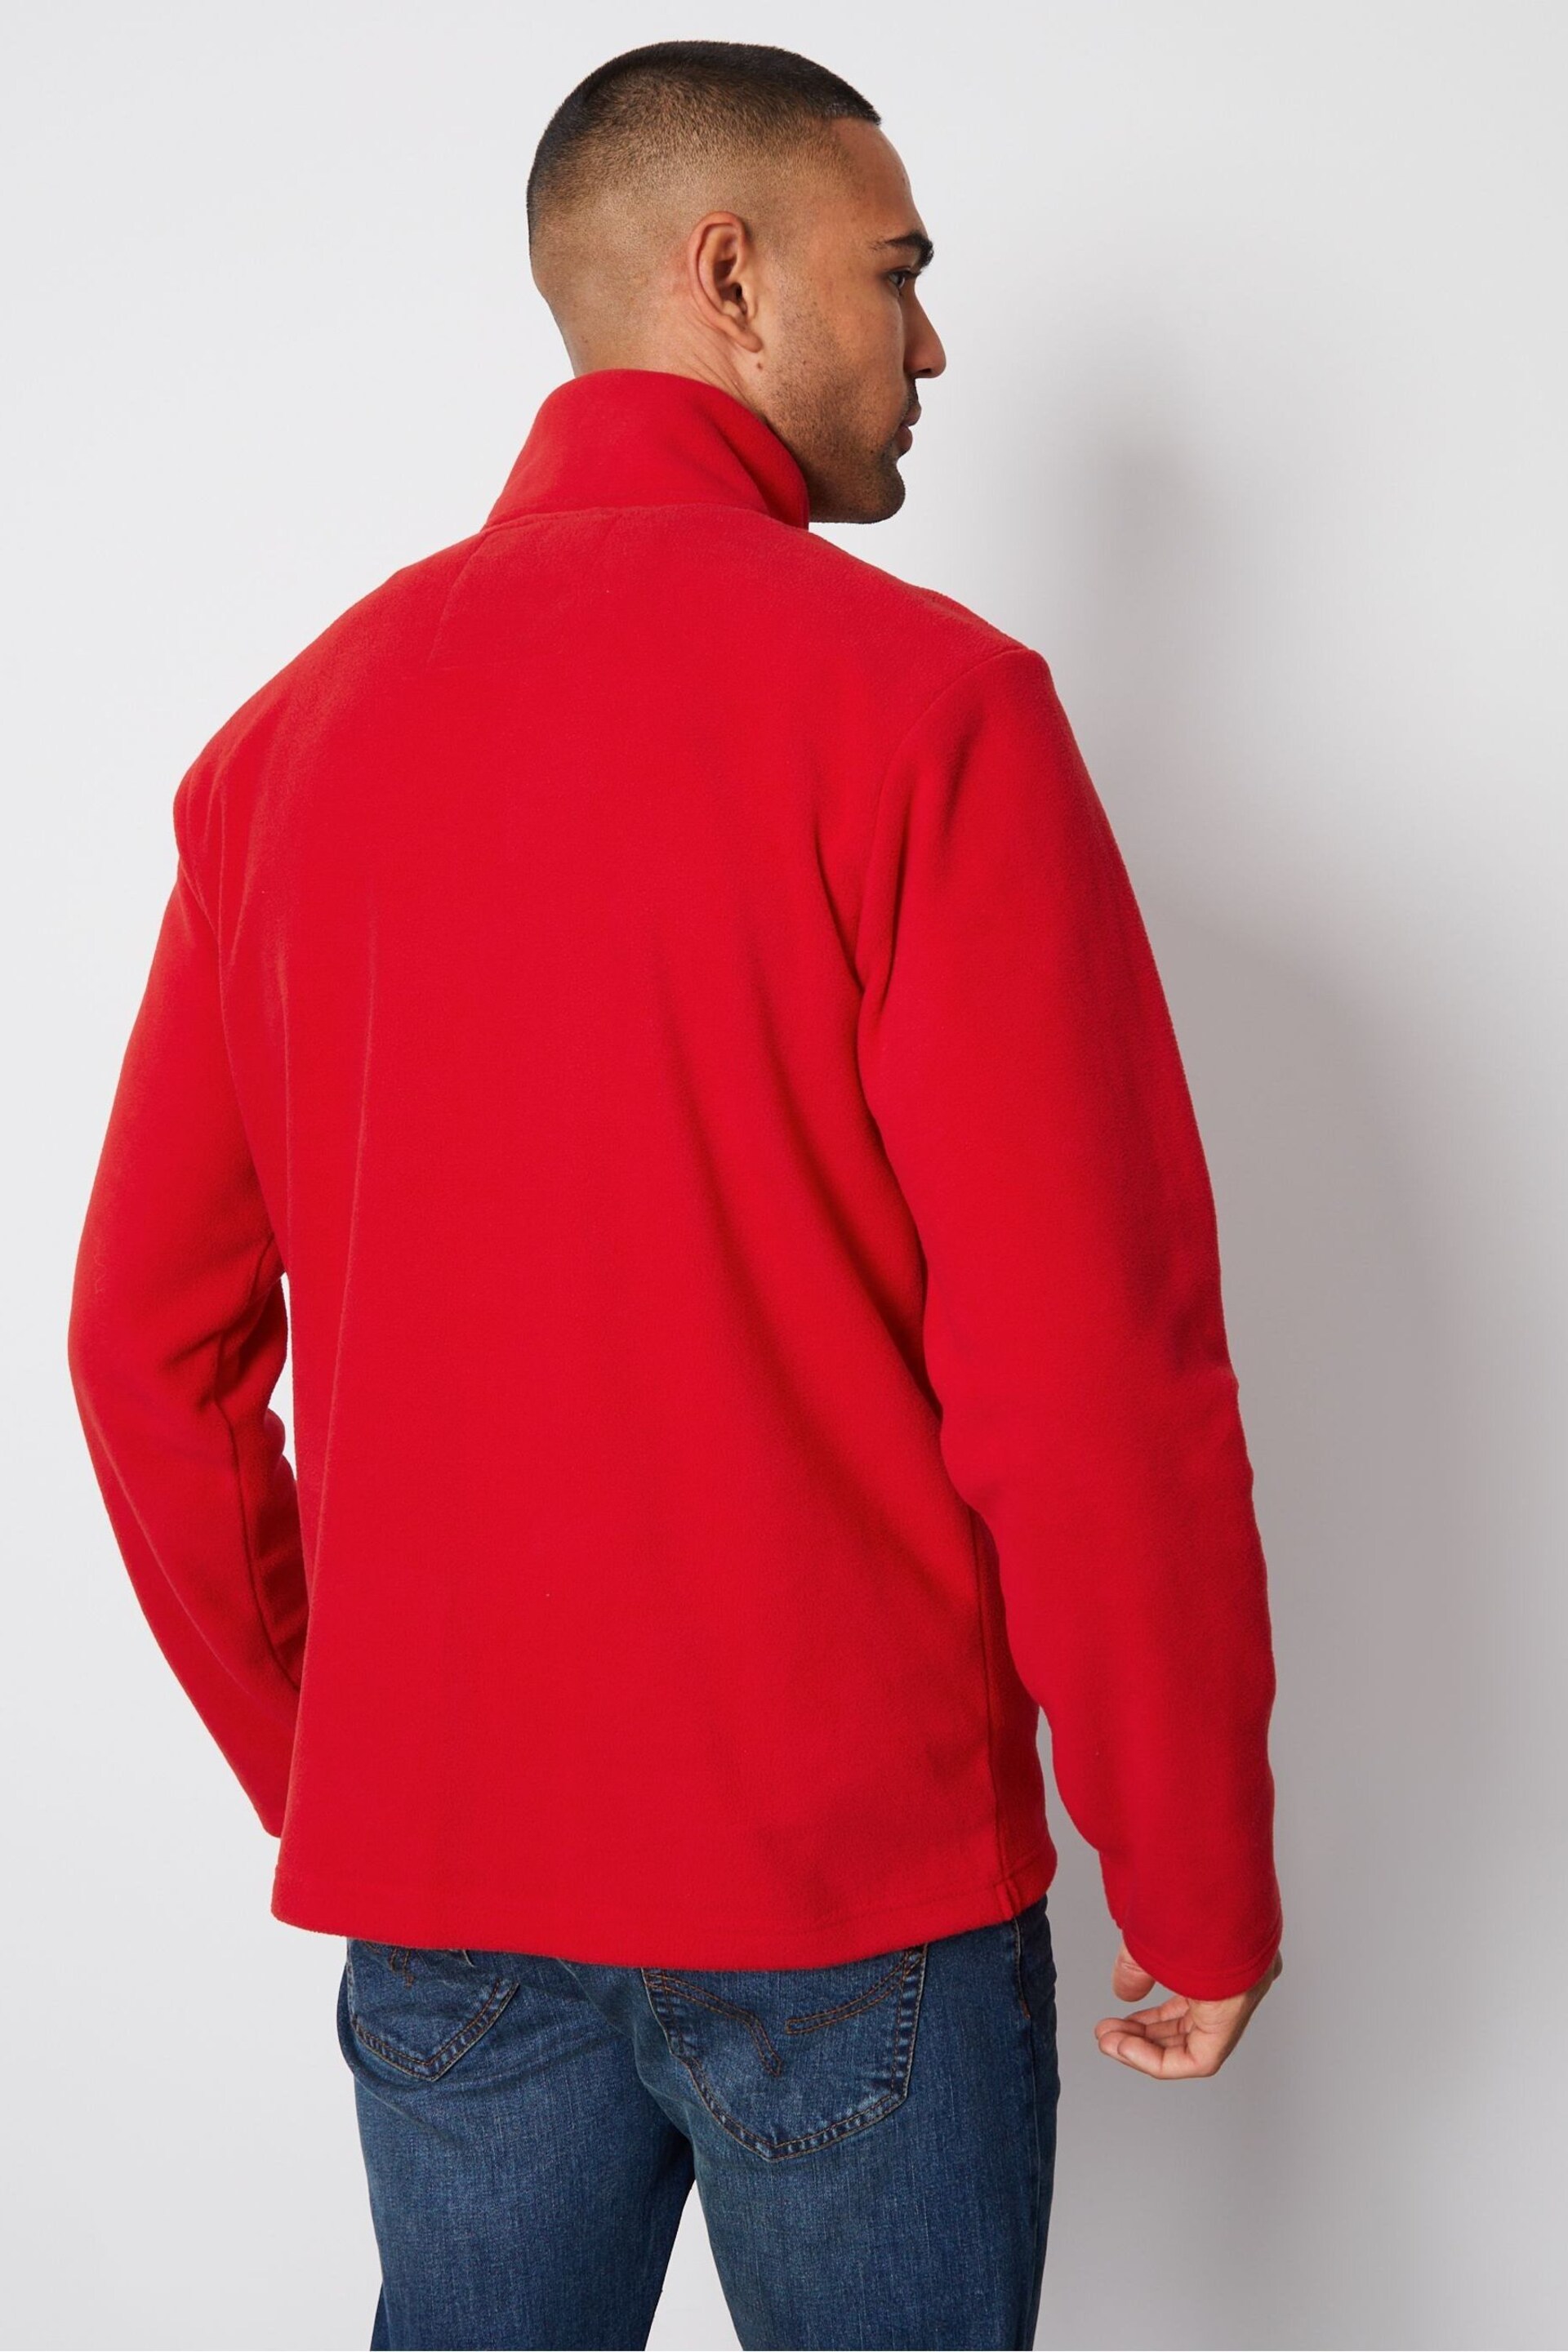 Threadbare Red 1/4 Zip Fleece Sweatshirt - Image 2 of 4